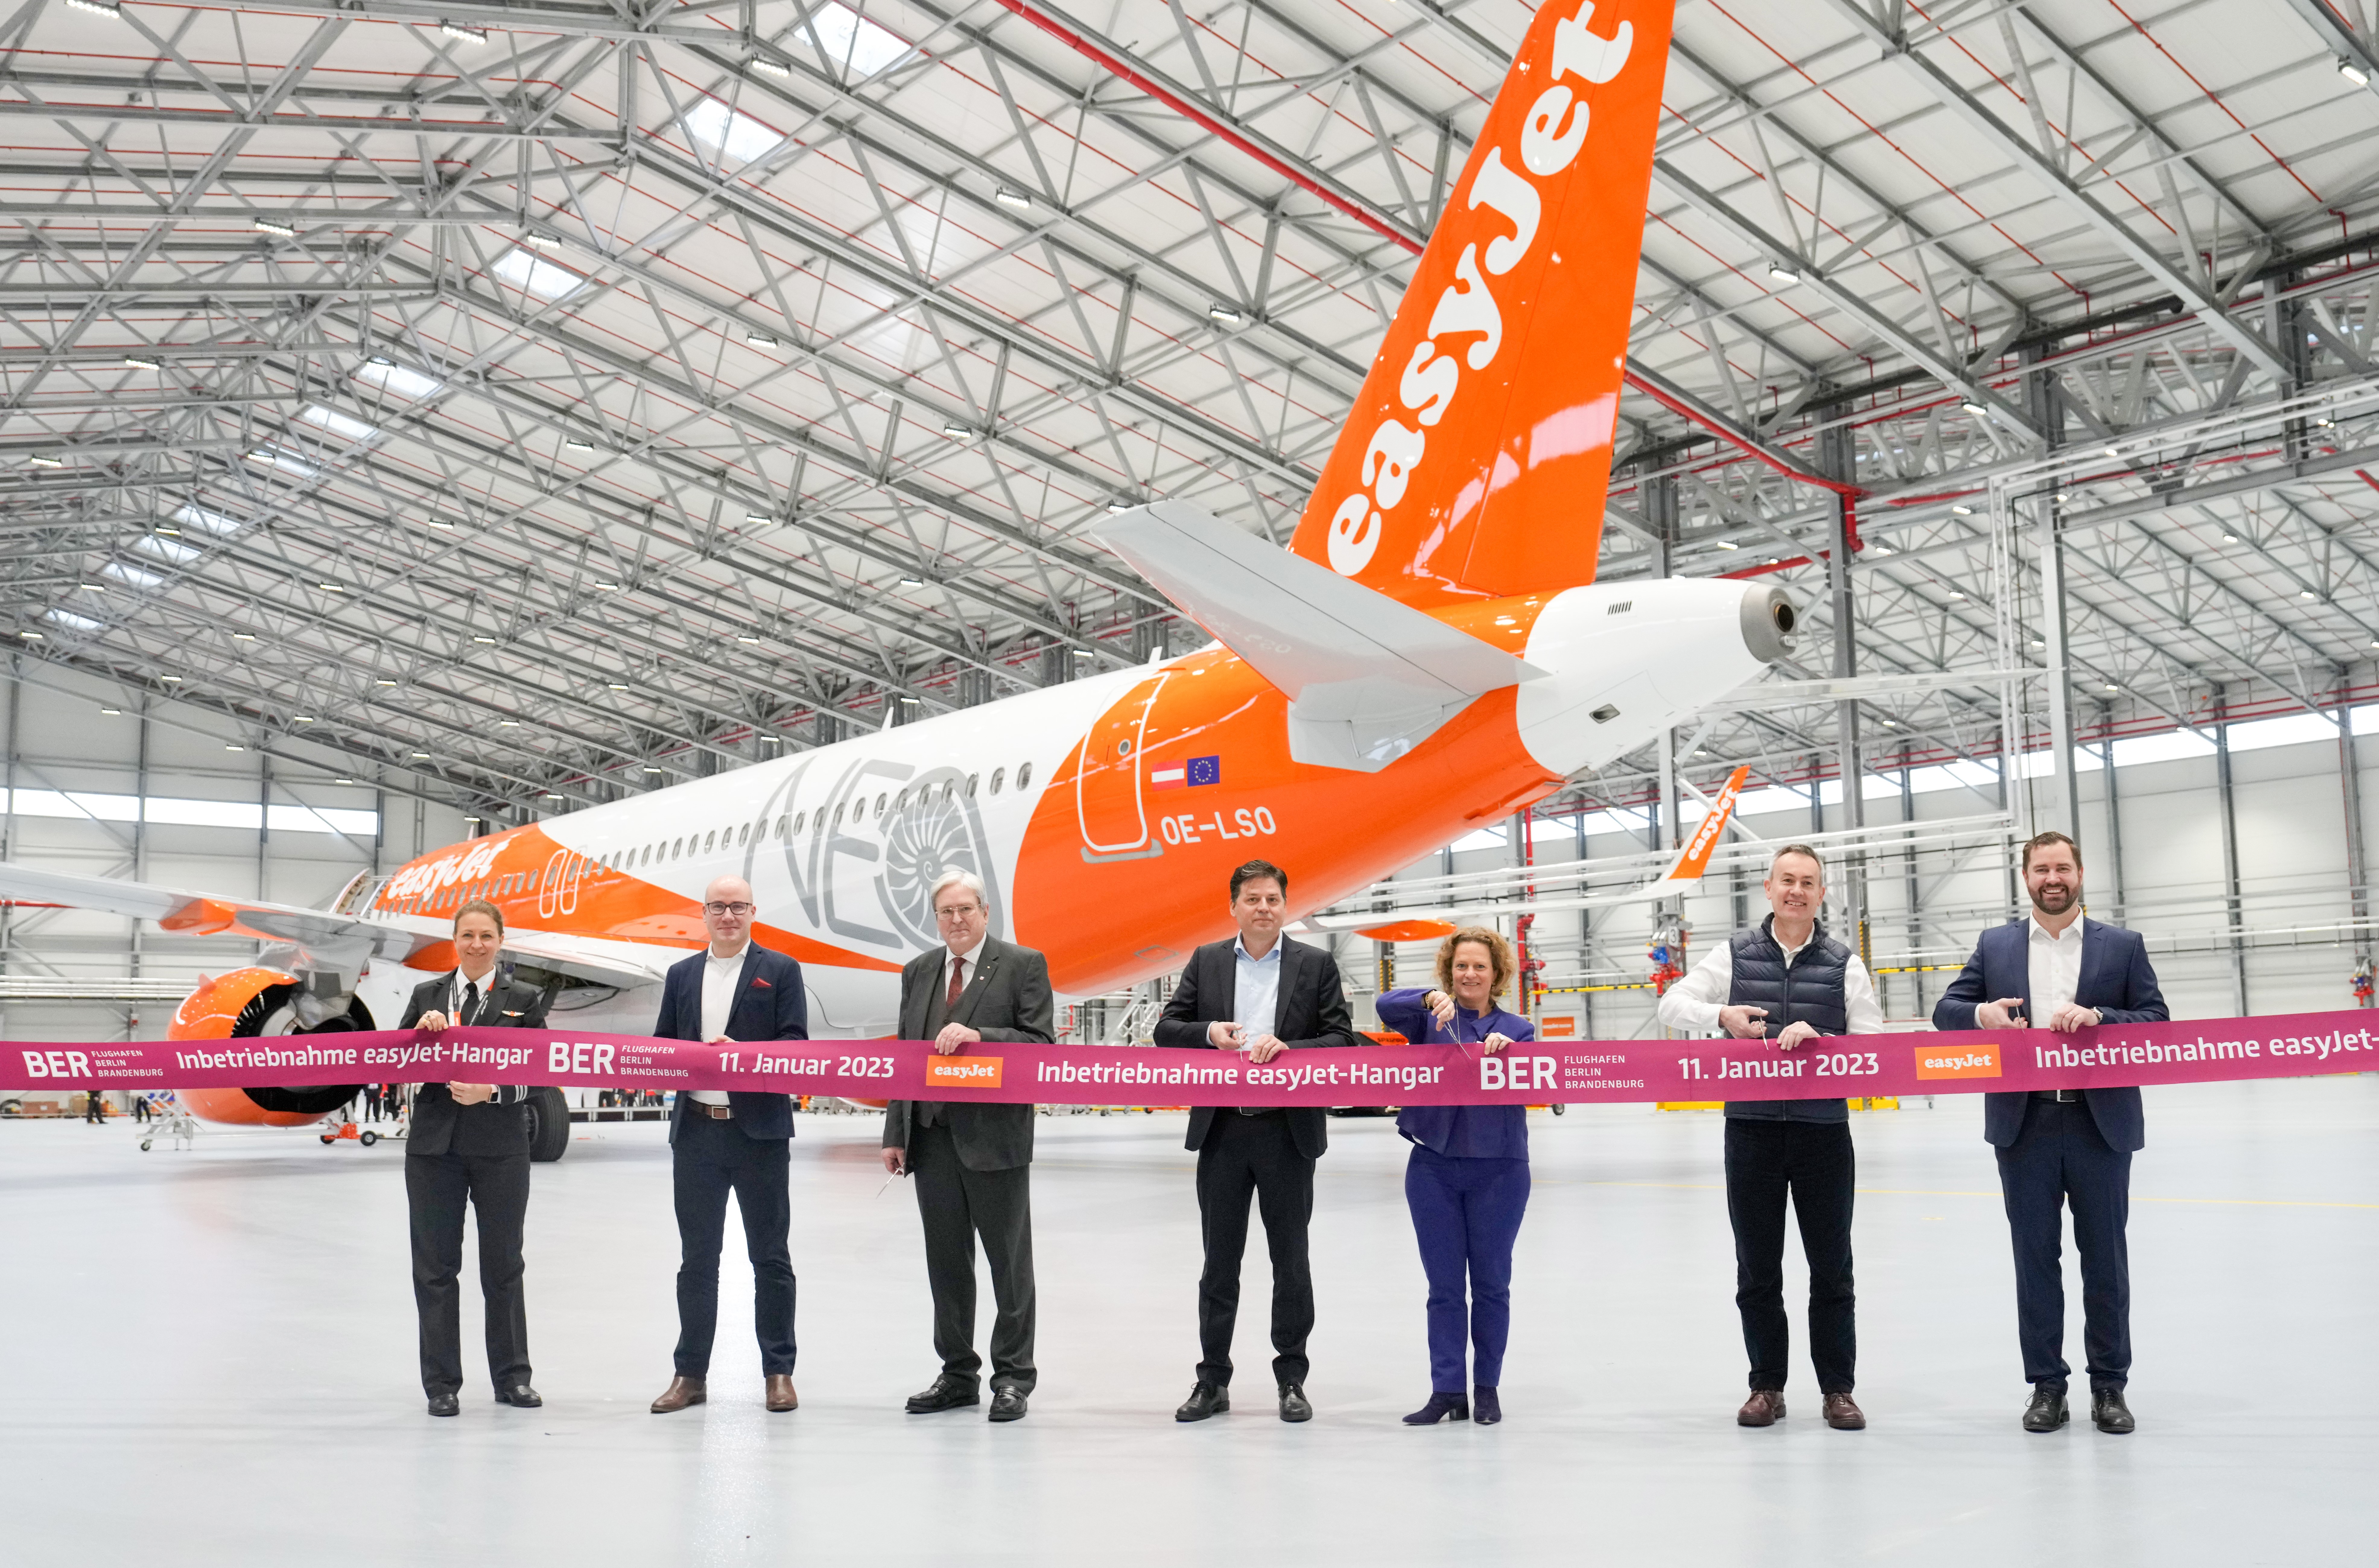 easyJet celebrates opening of new maintenance hangar at BER airport